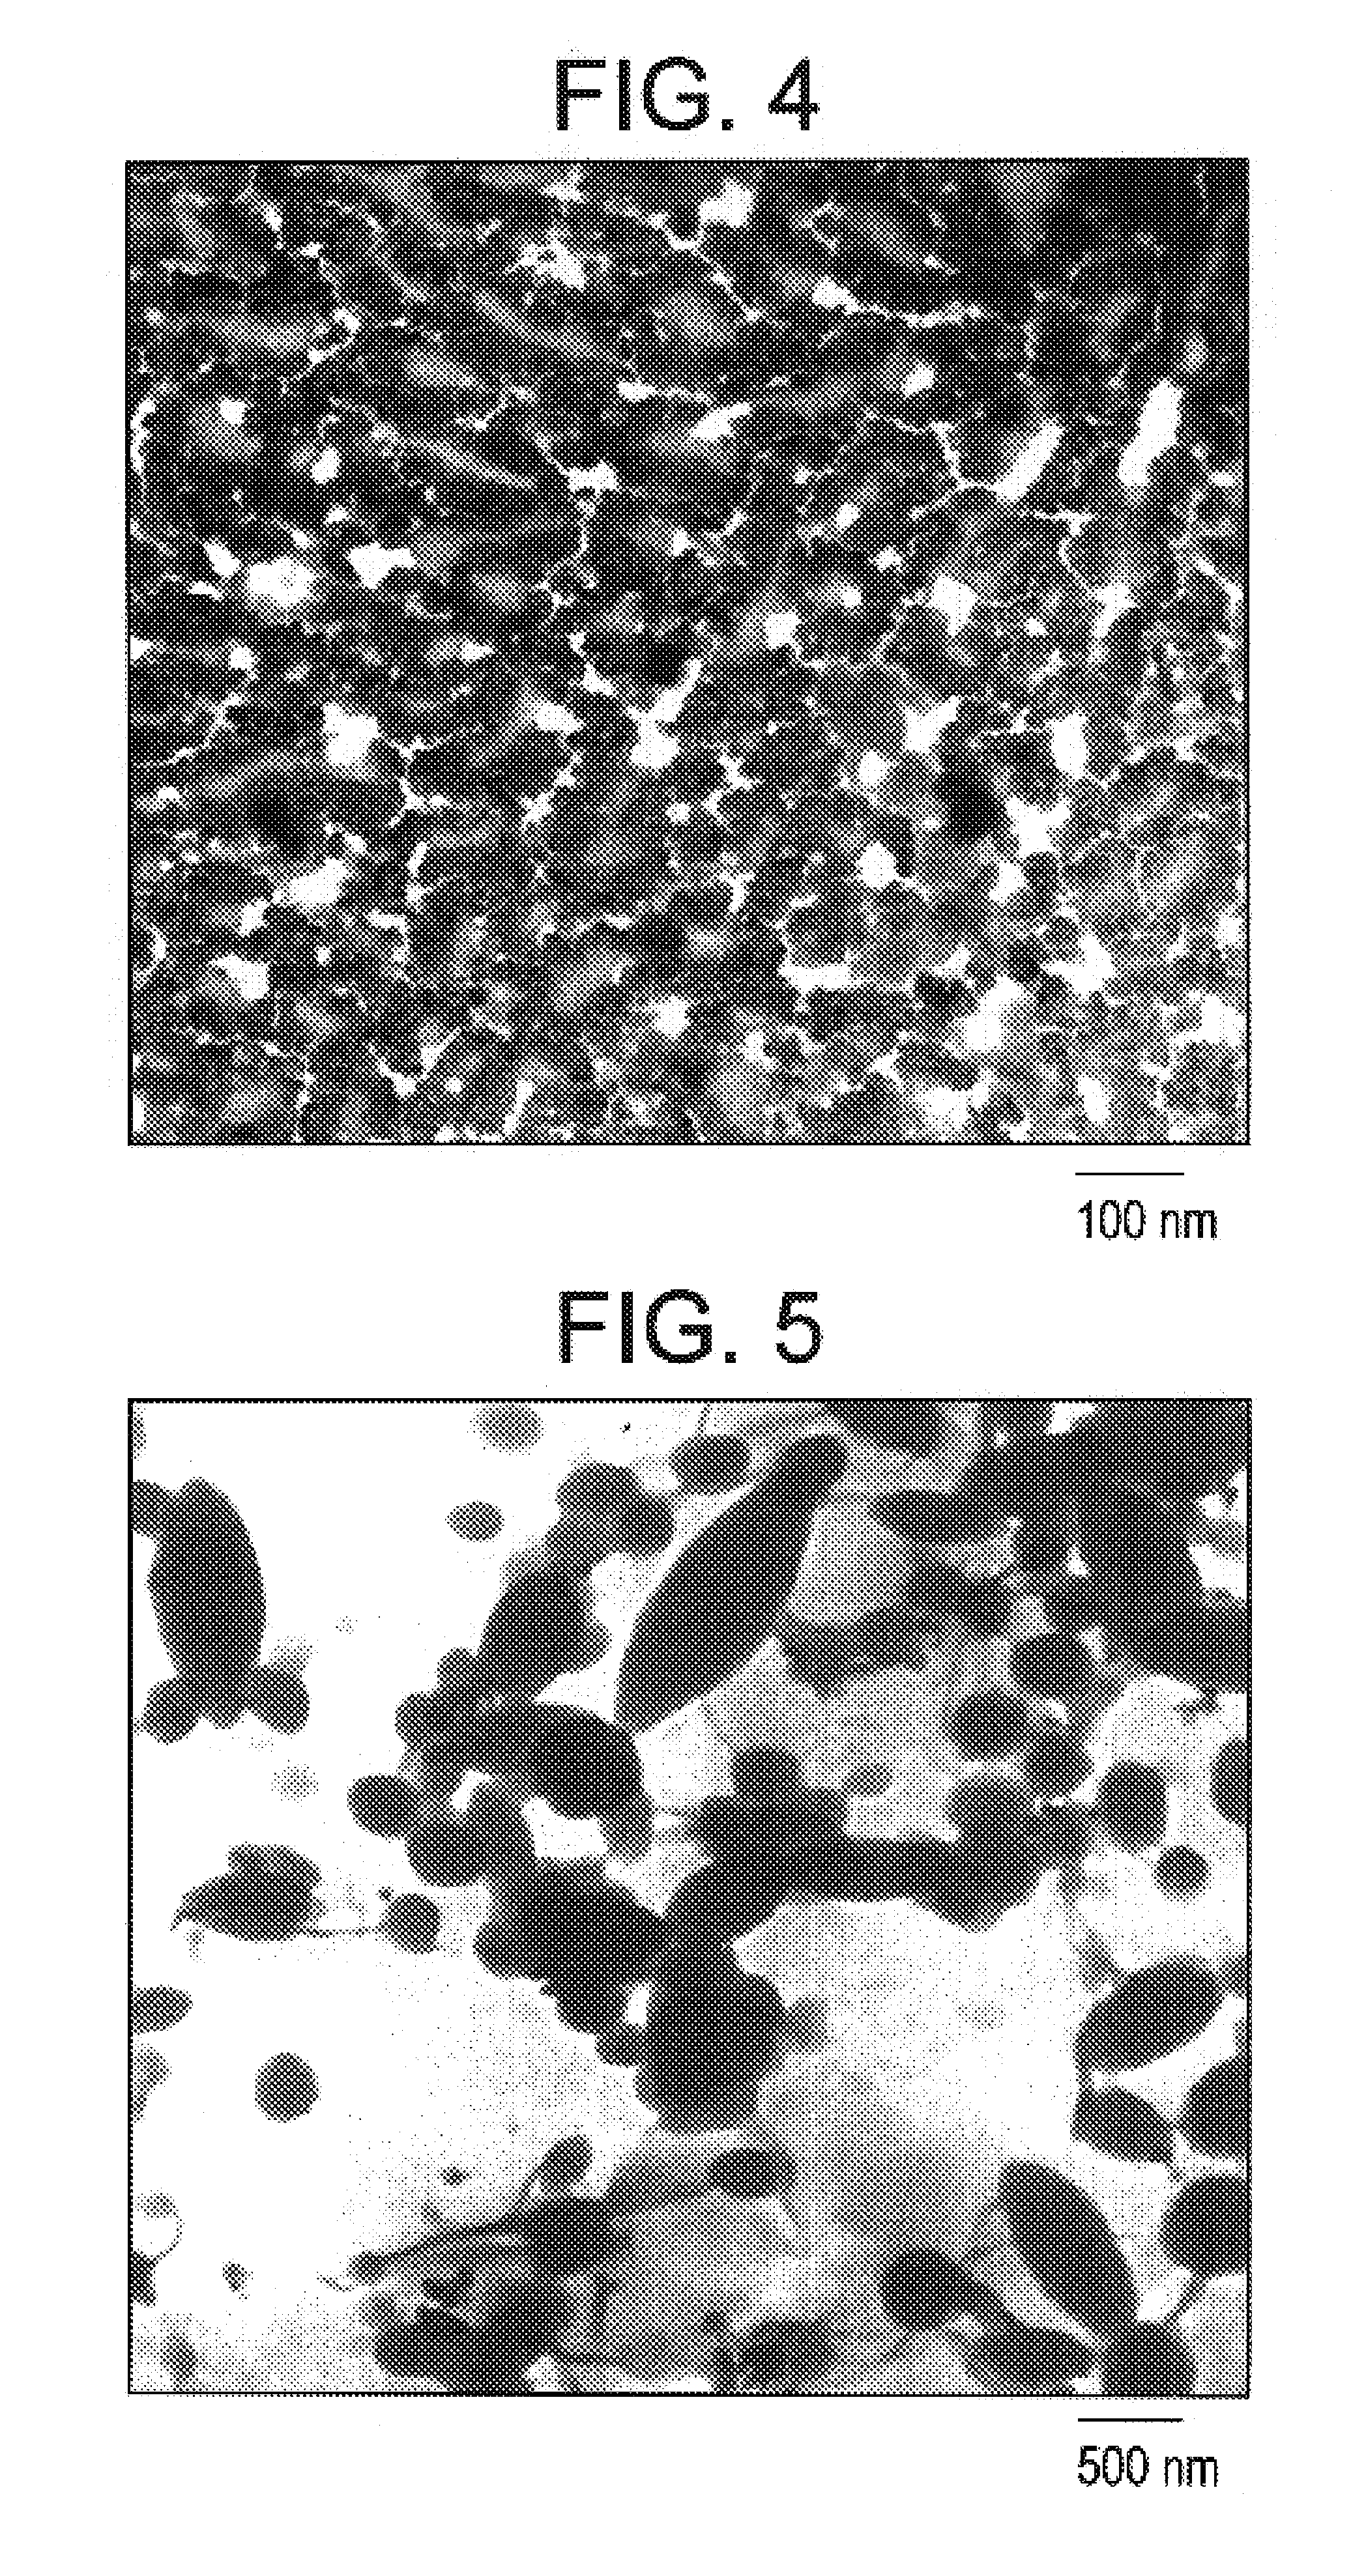 Polymeric encapsulation of nanoparticles